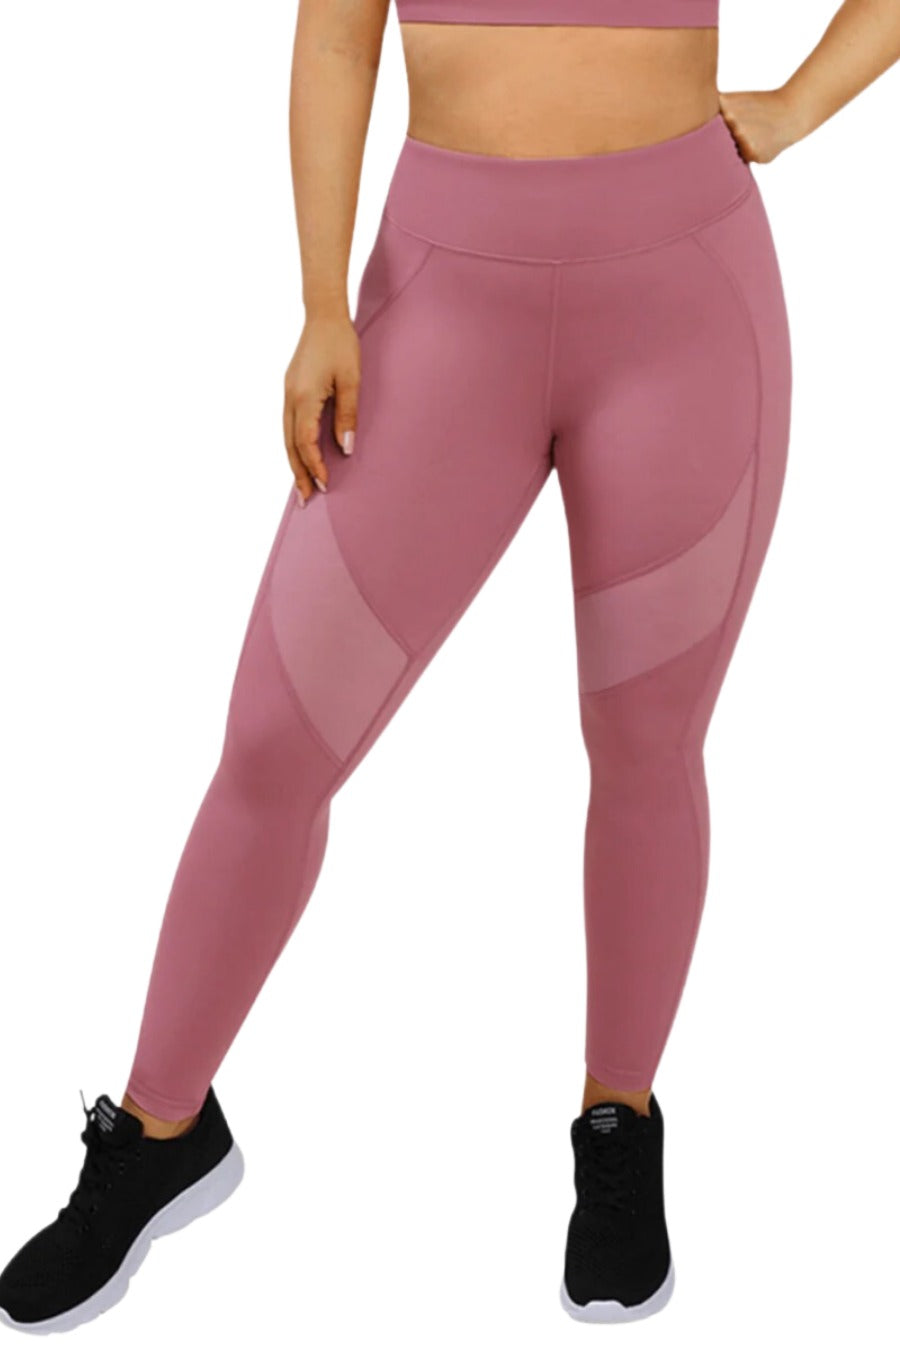 SAMPLE - Pink Active Legging XL